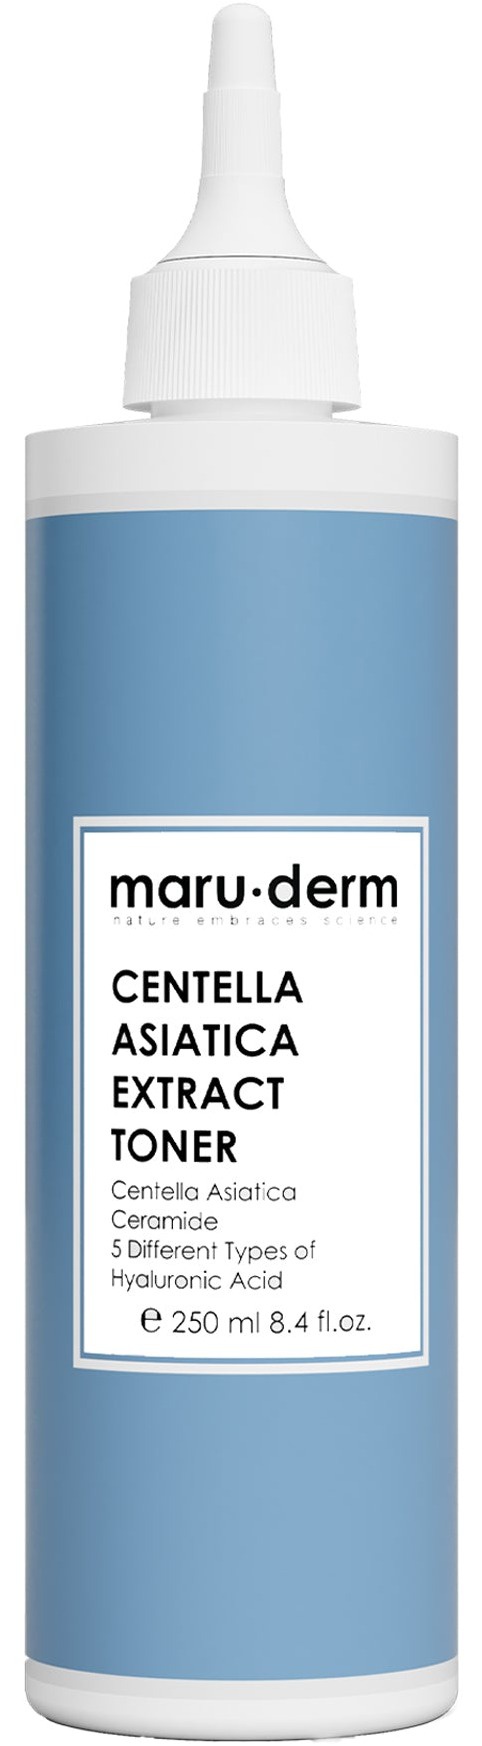 Maruderm Centella Asiatica Extract Toner